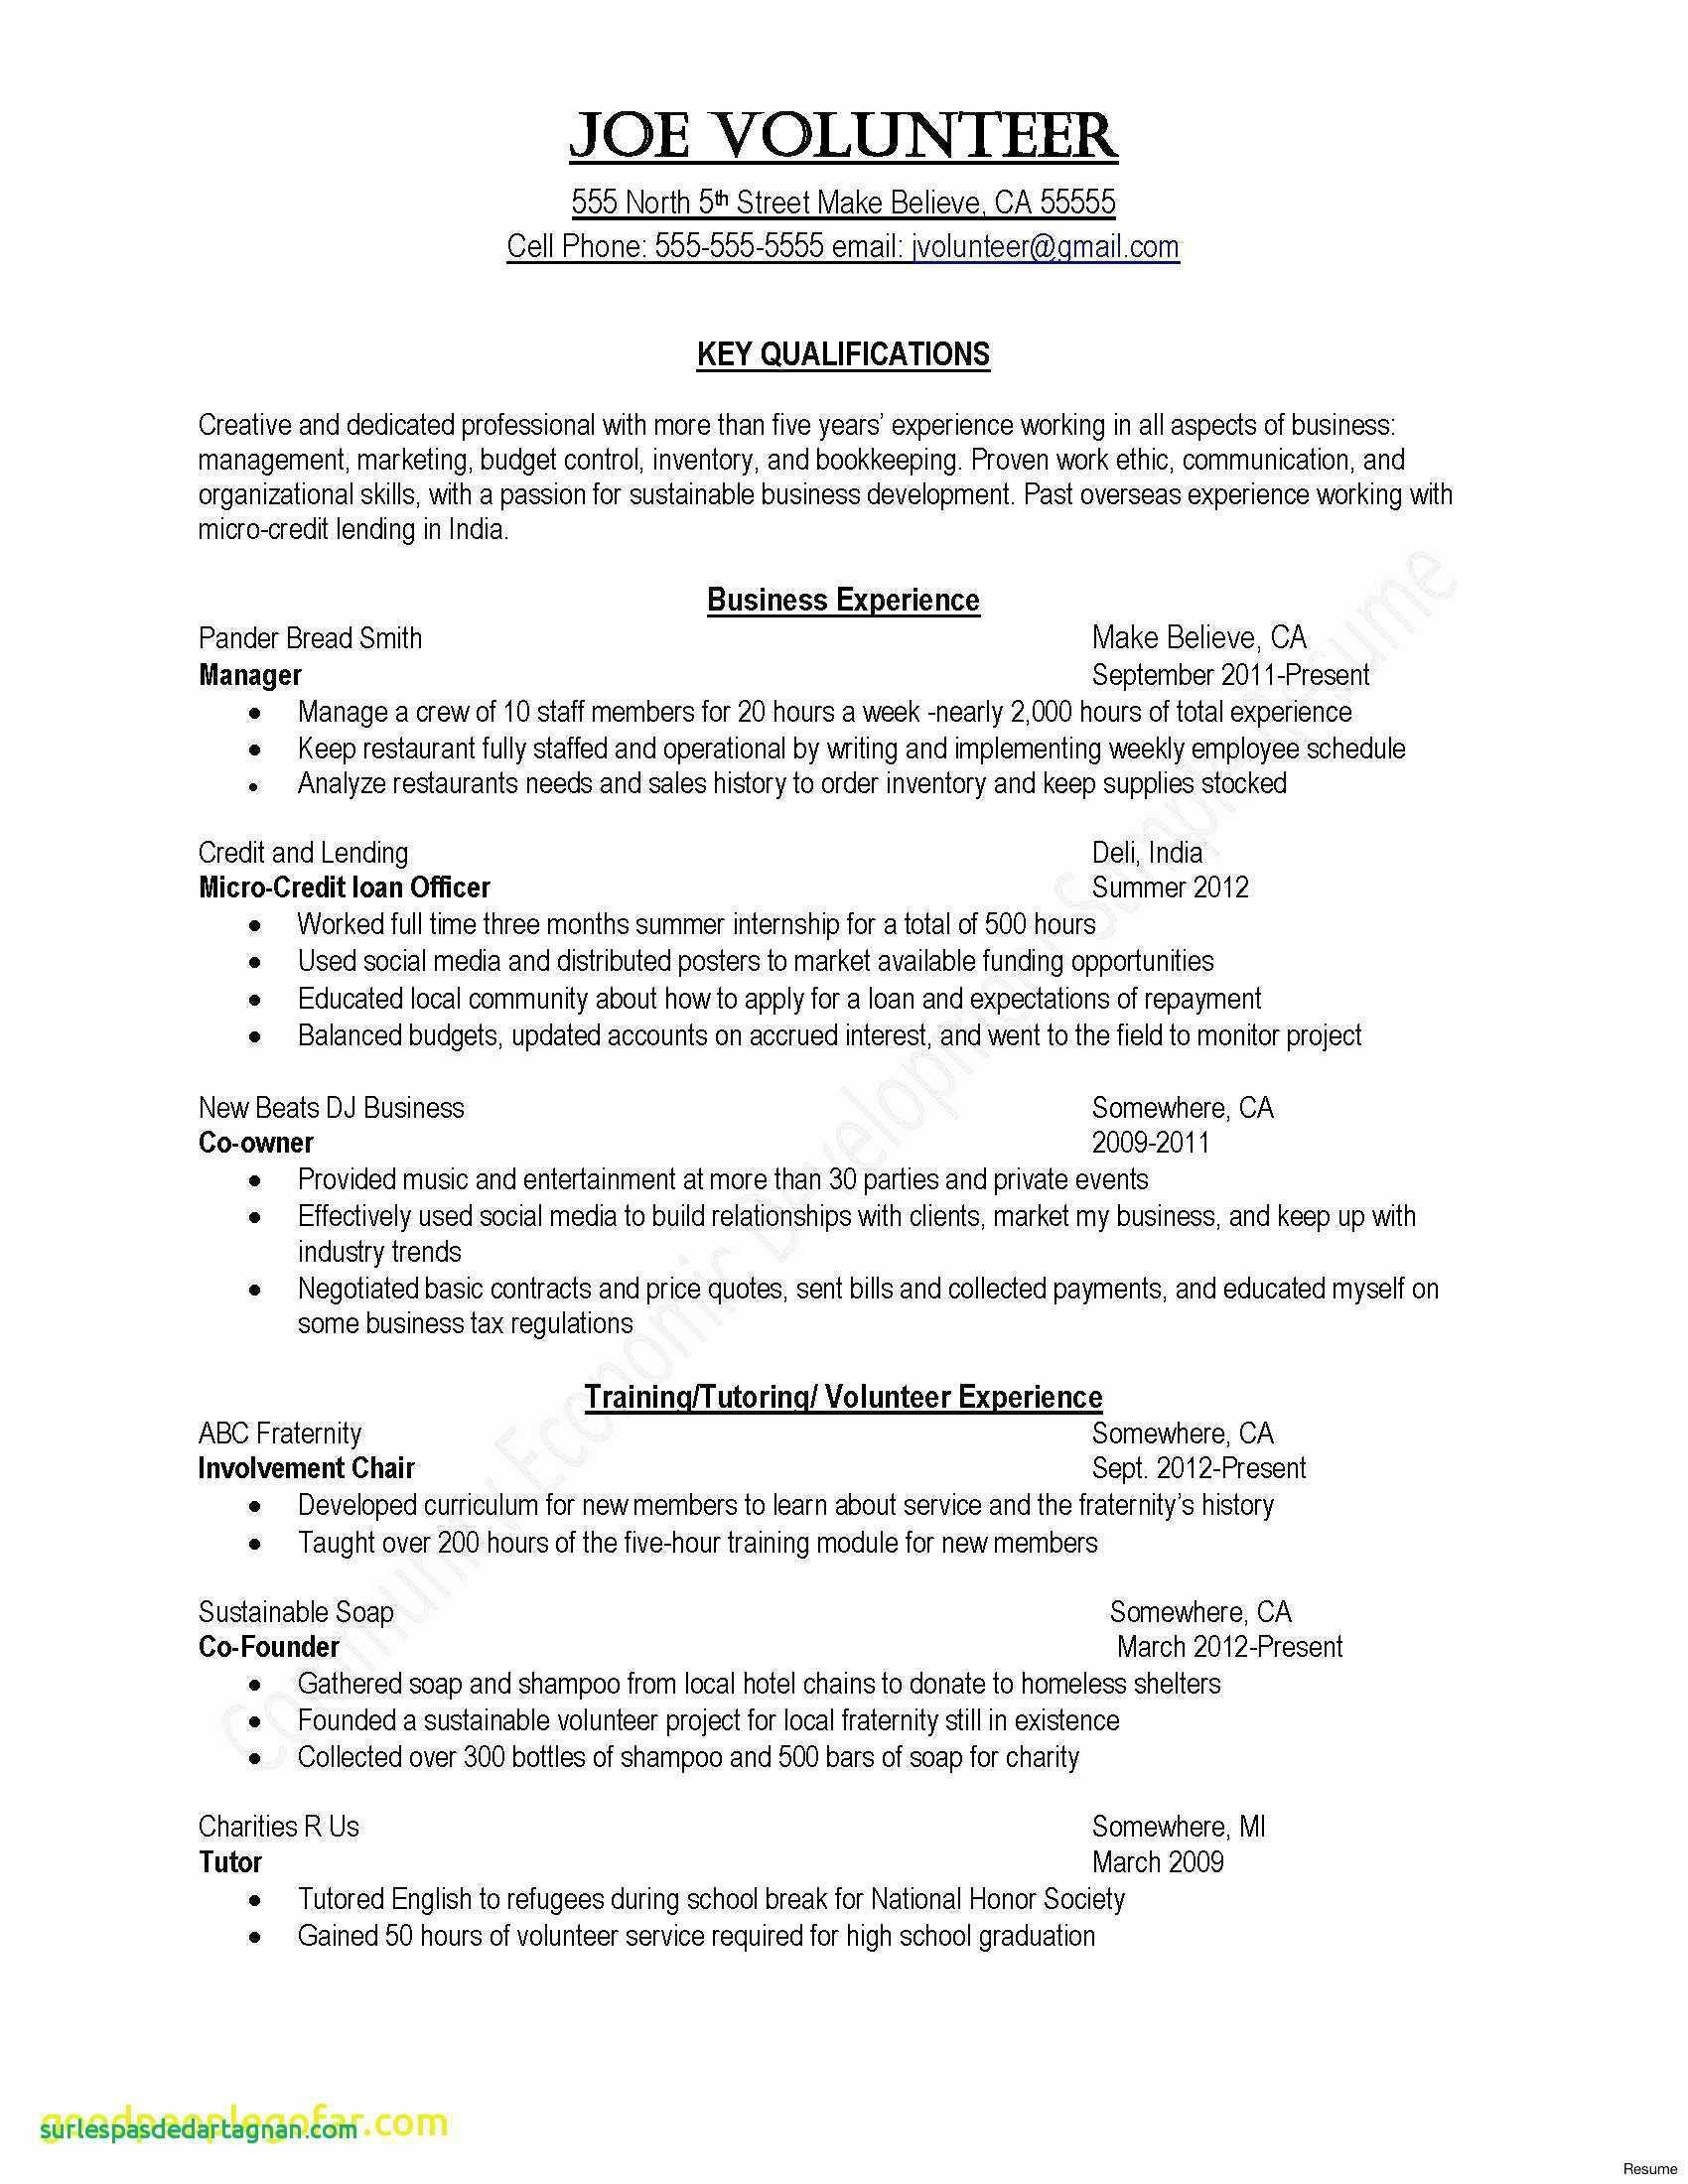 Free Downloadable Resume Templates Dj Resume Template Download free downloadable resume templates|wikiresume.com